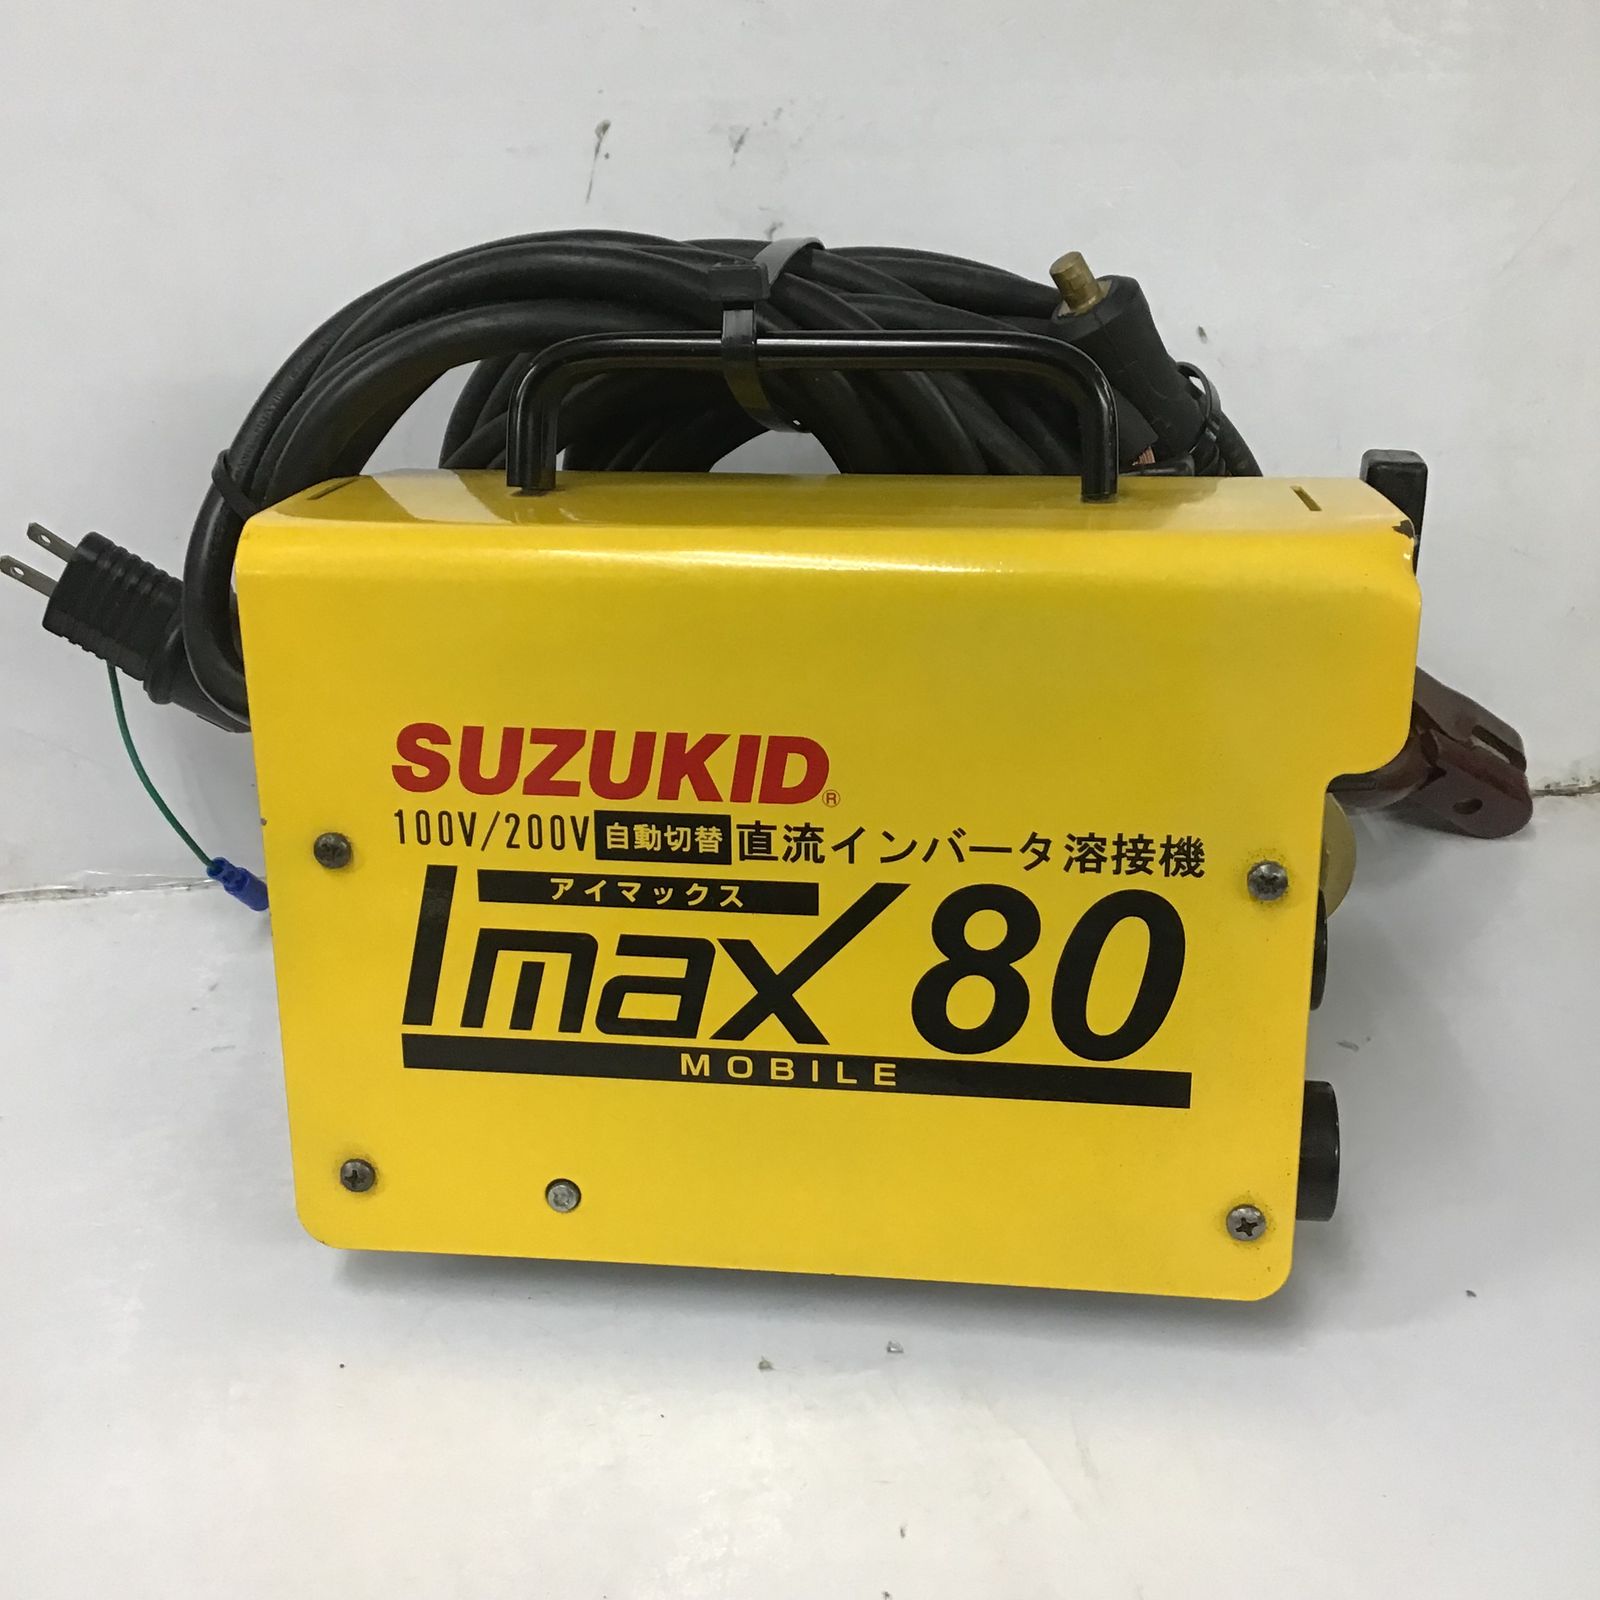 SUZUKID Imax80 被覆アーク溶接機 - 工具/メンテナンス